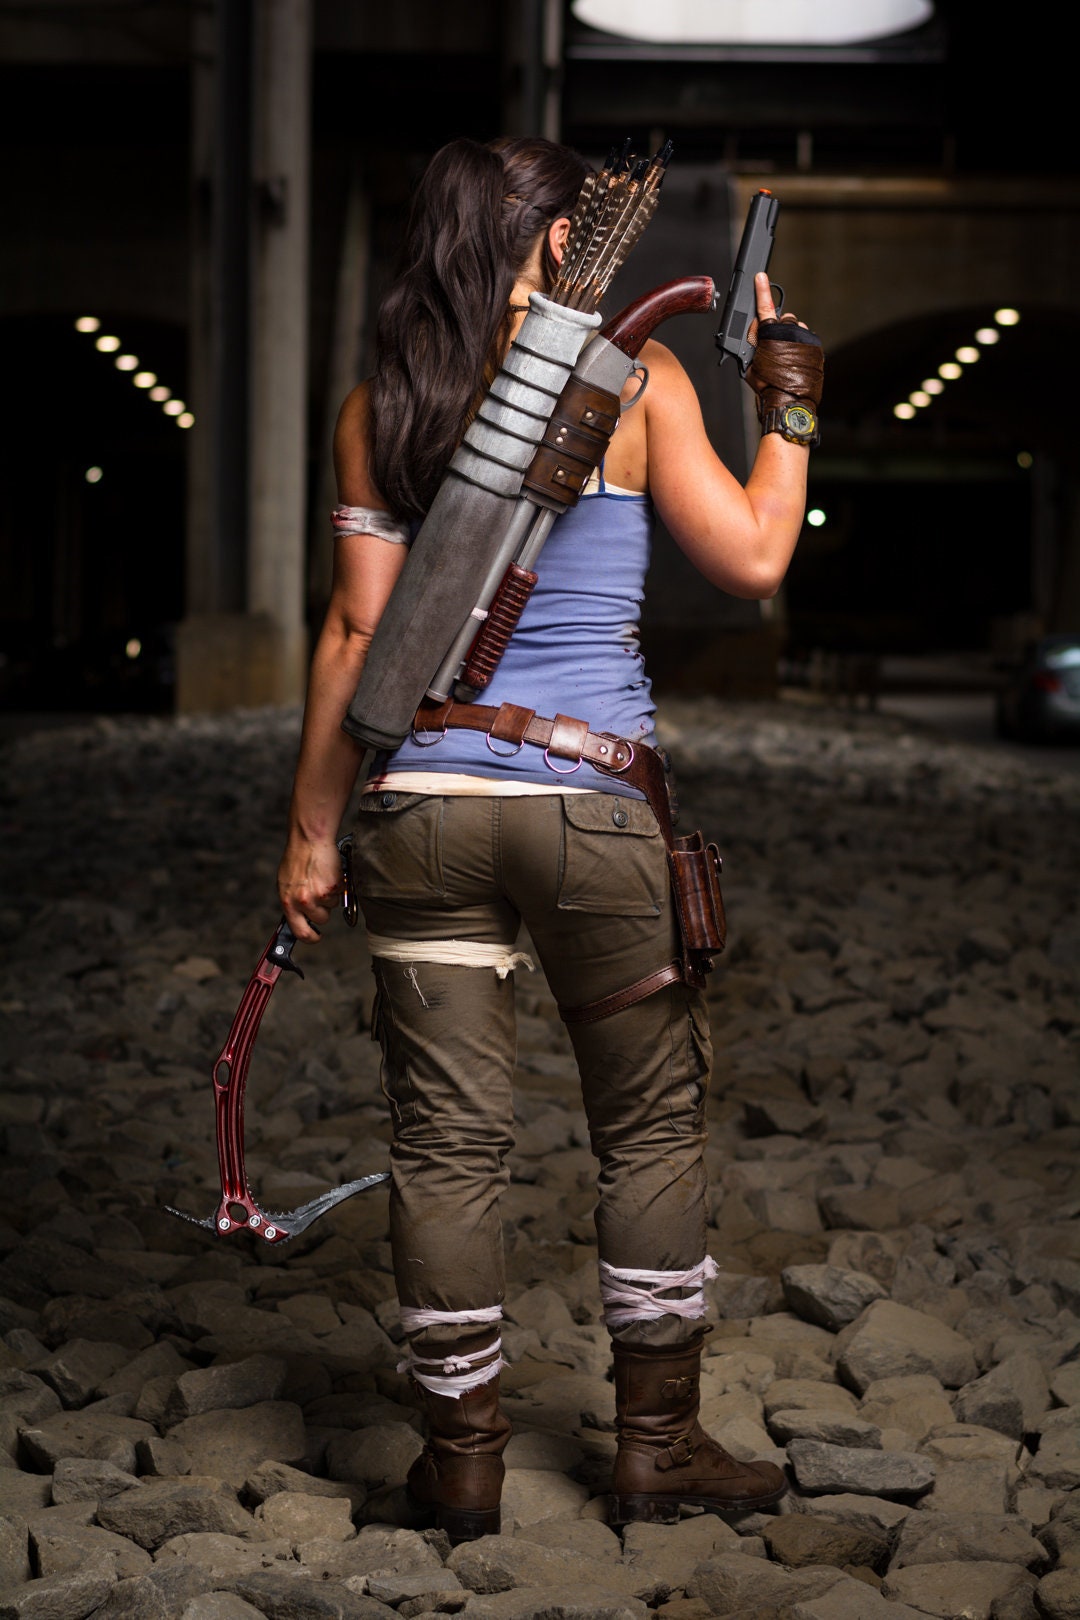 Lara Croft [Tomb Raider] Cosplay 